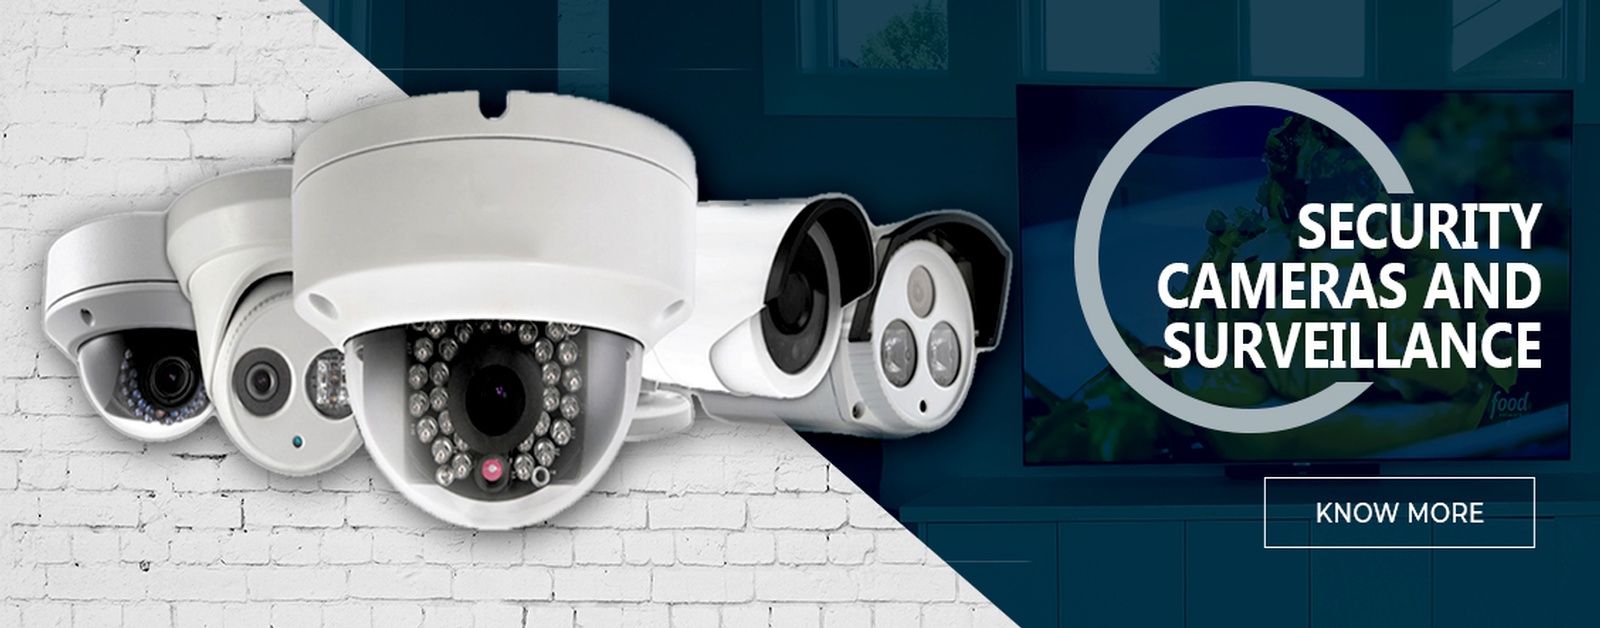 Security Cameras And Surveillance